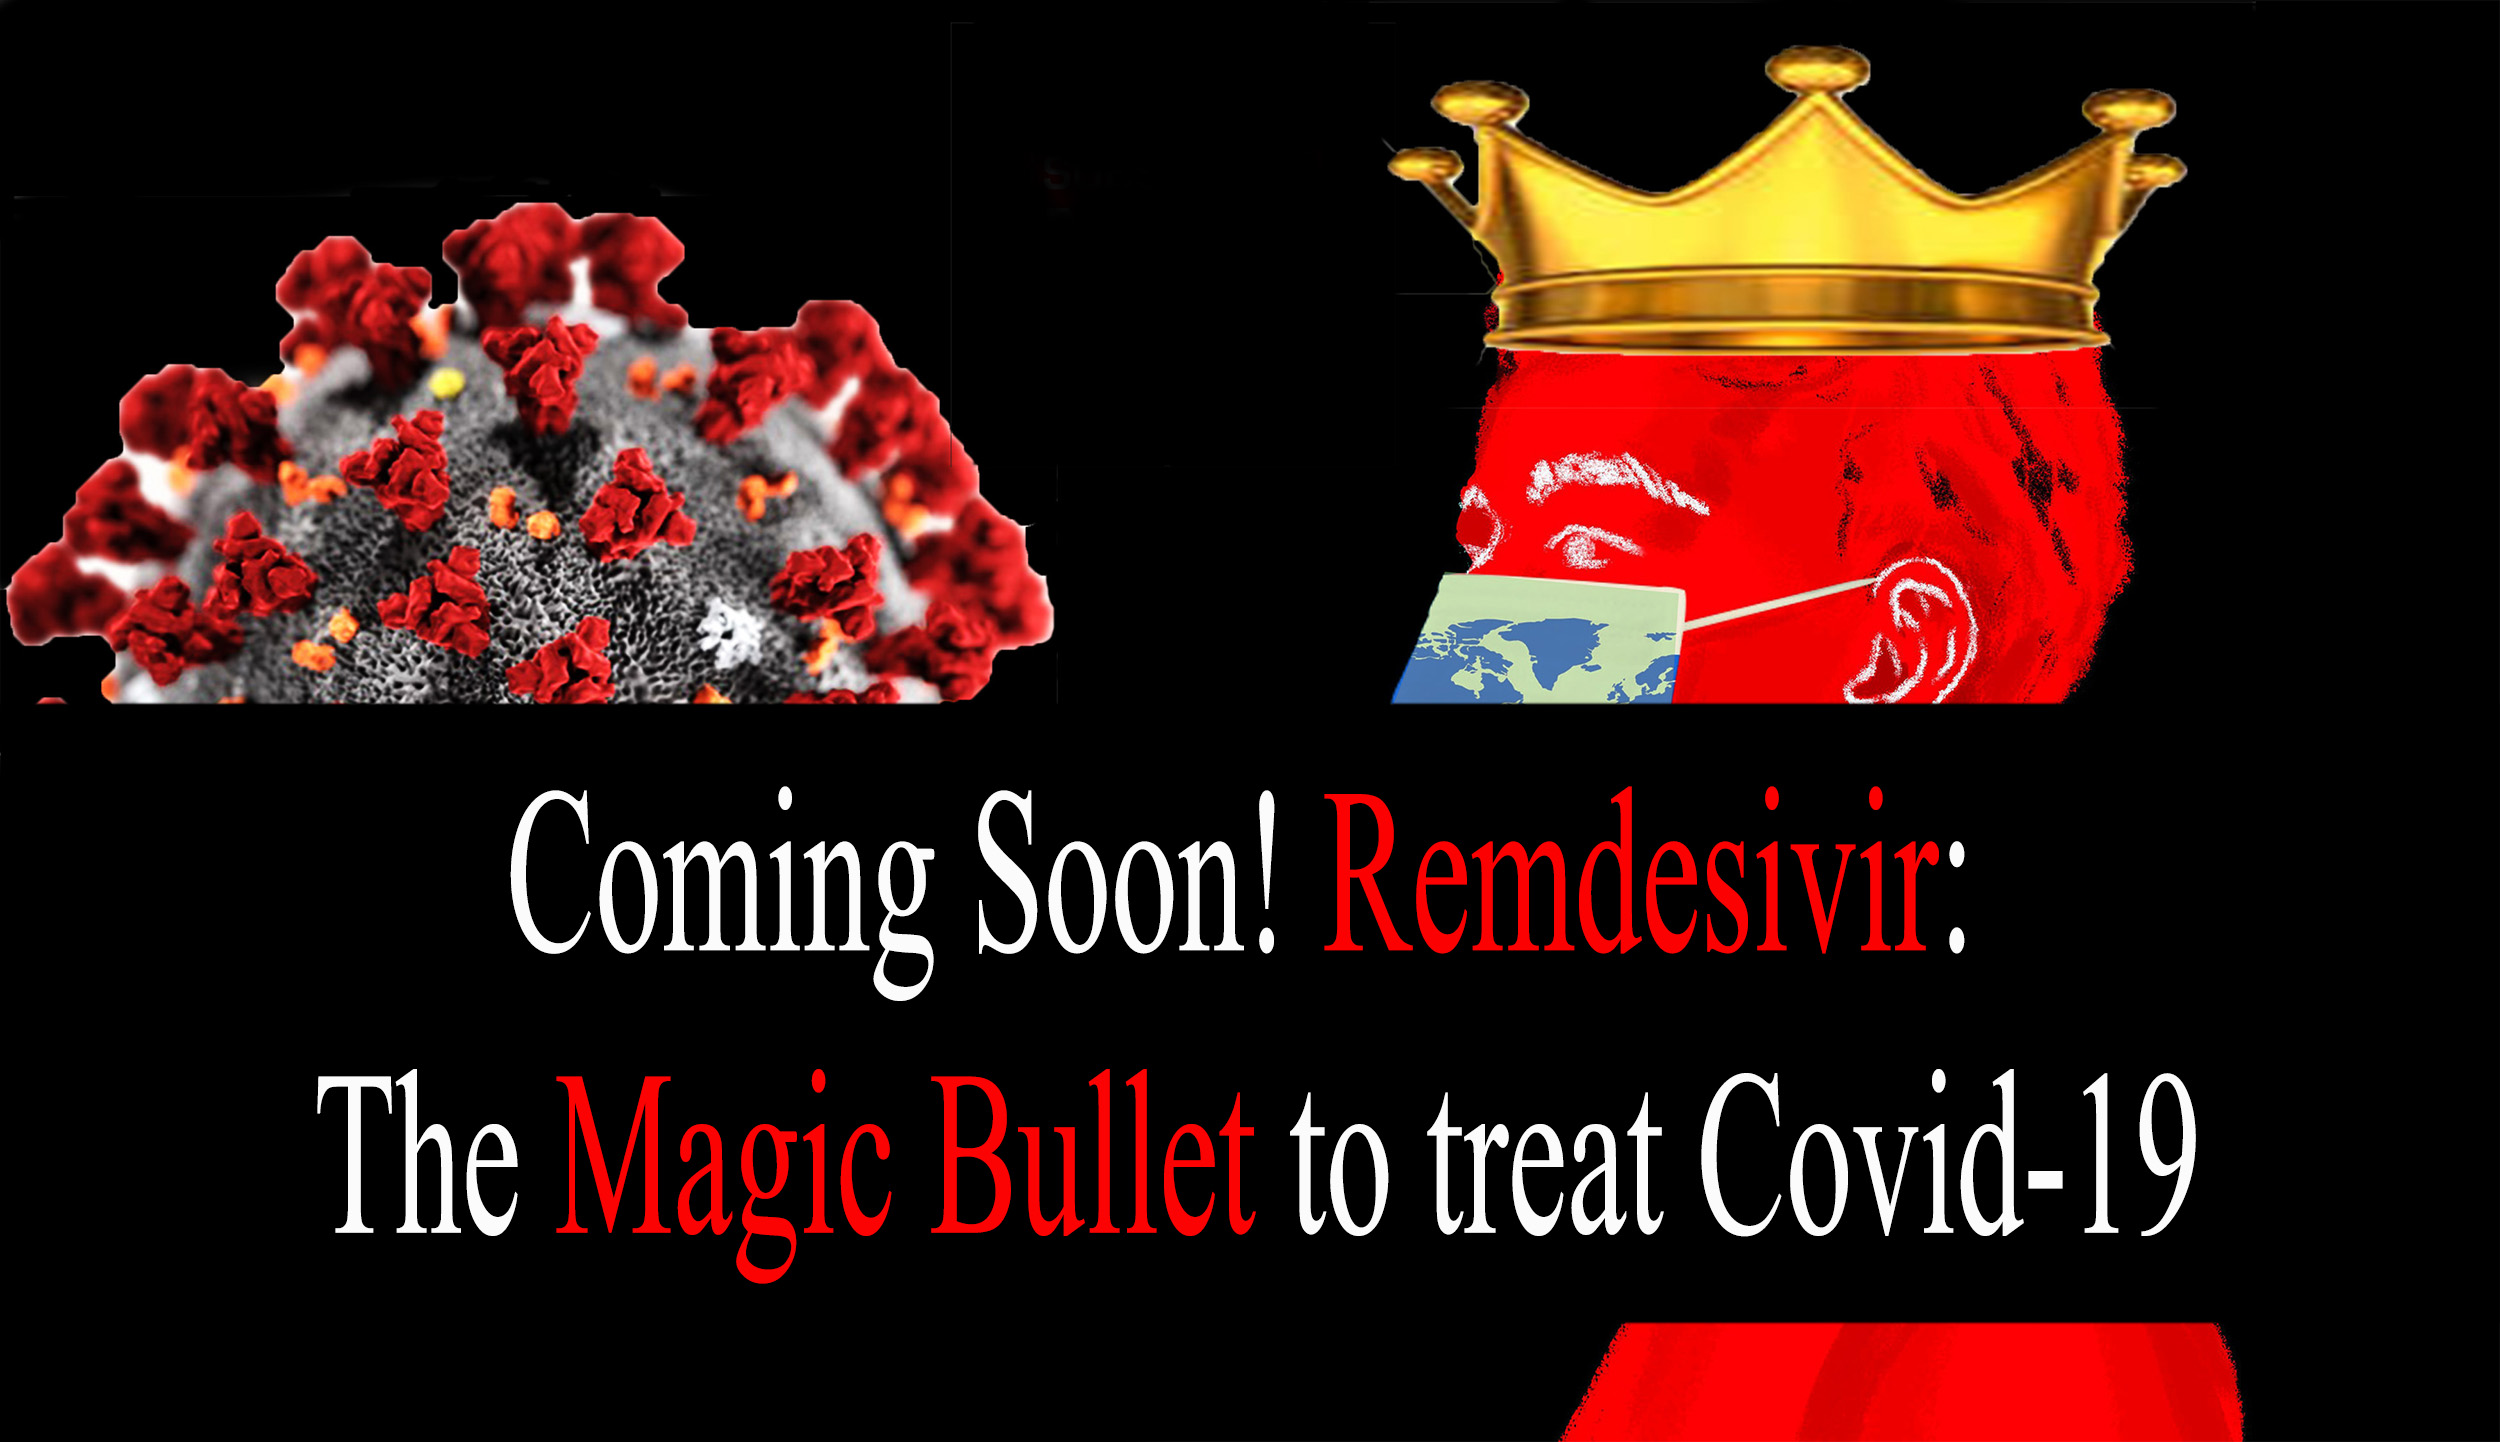 Coming Soon! Remdesivir: The Magic Bullet to treat Covid-19.